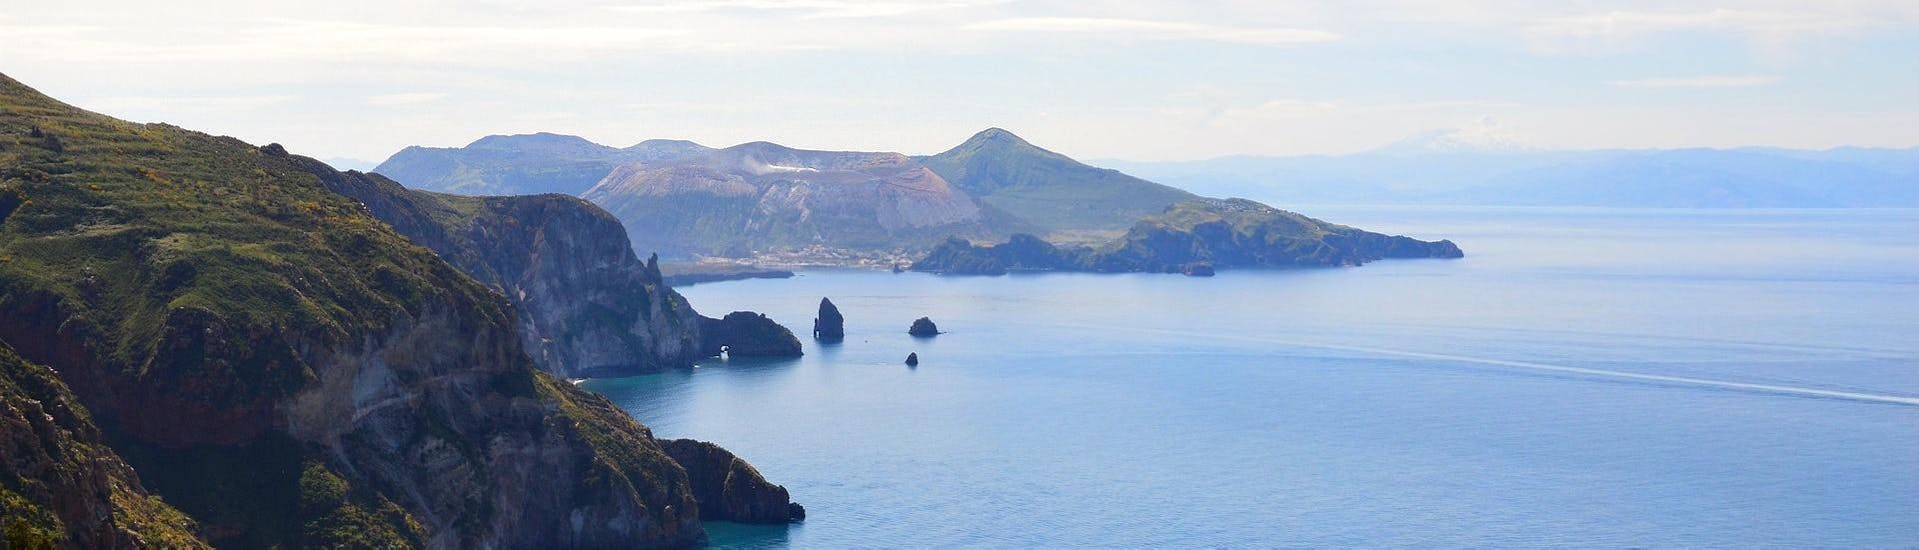 Panoramablick auf die Insel Lipari.